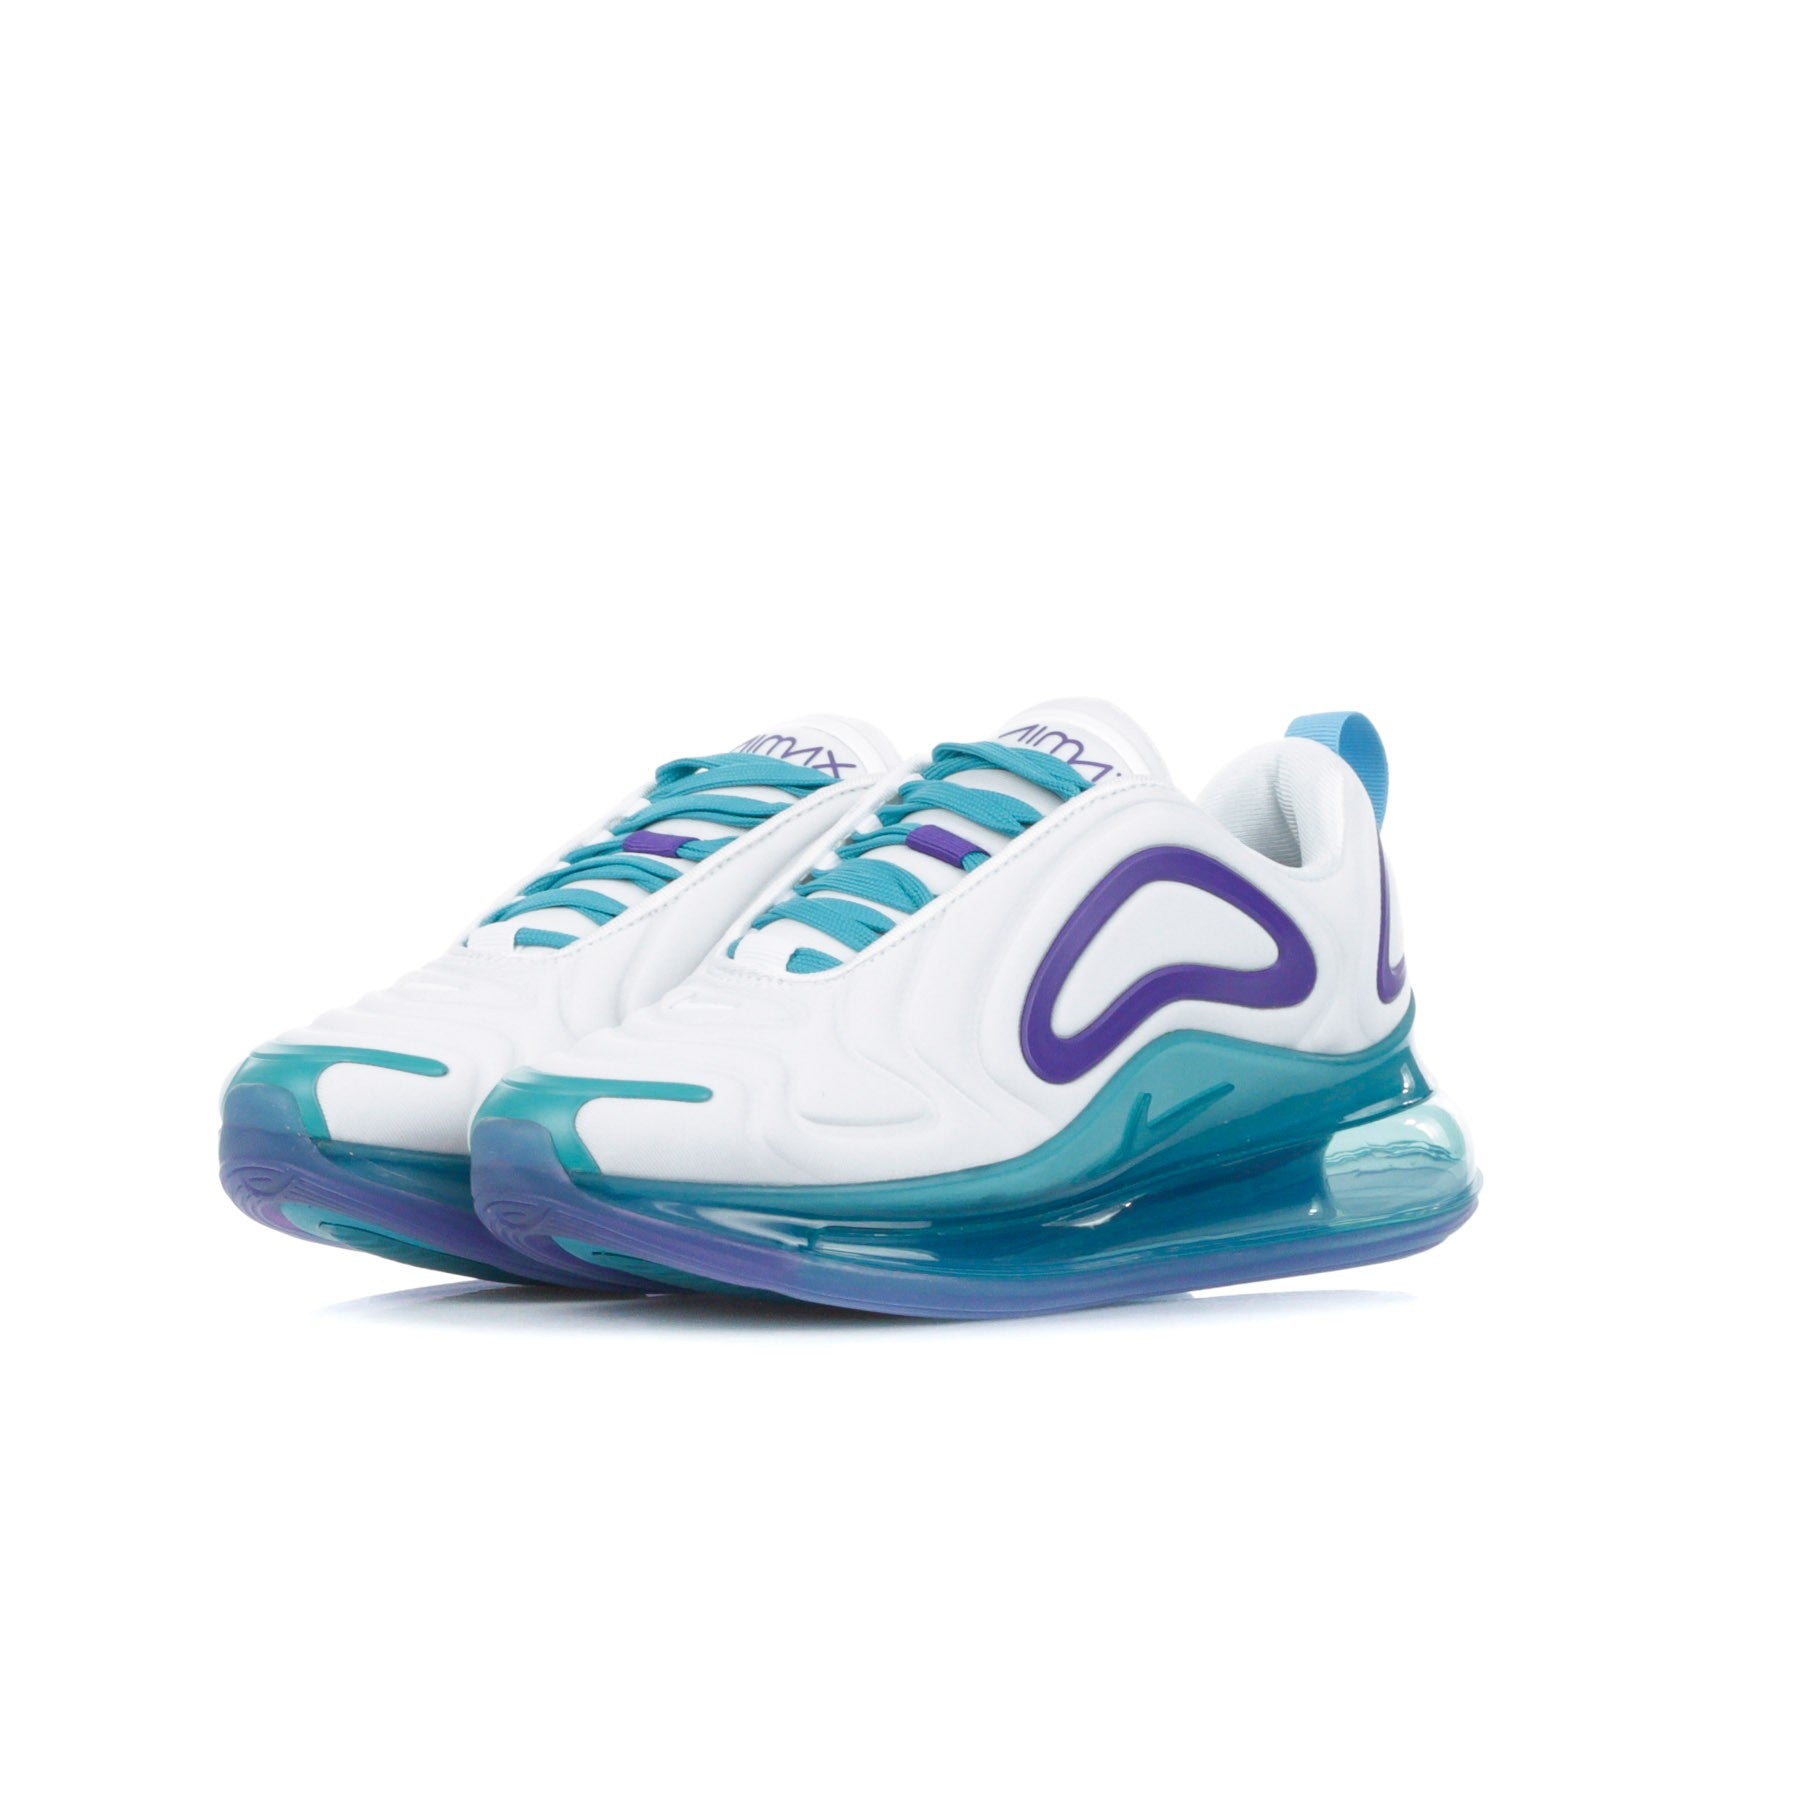 W Air Max 720 White/court Purple/spirit Teal Women's Low Shoe